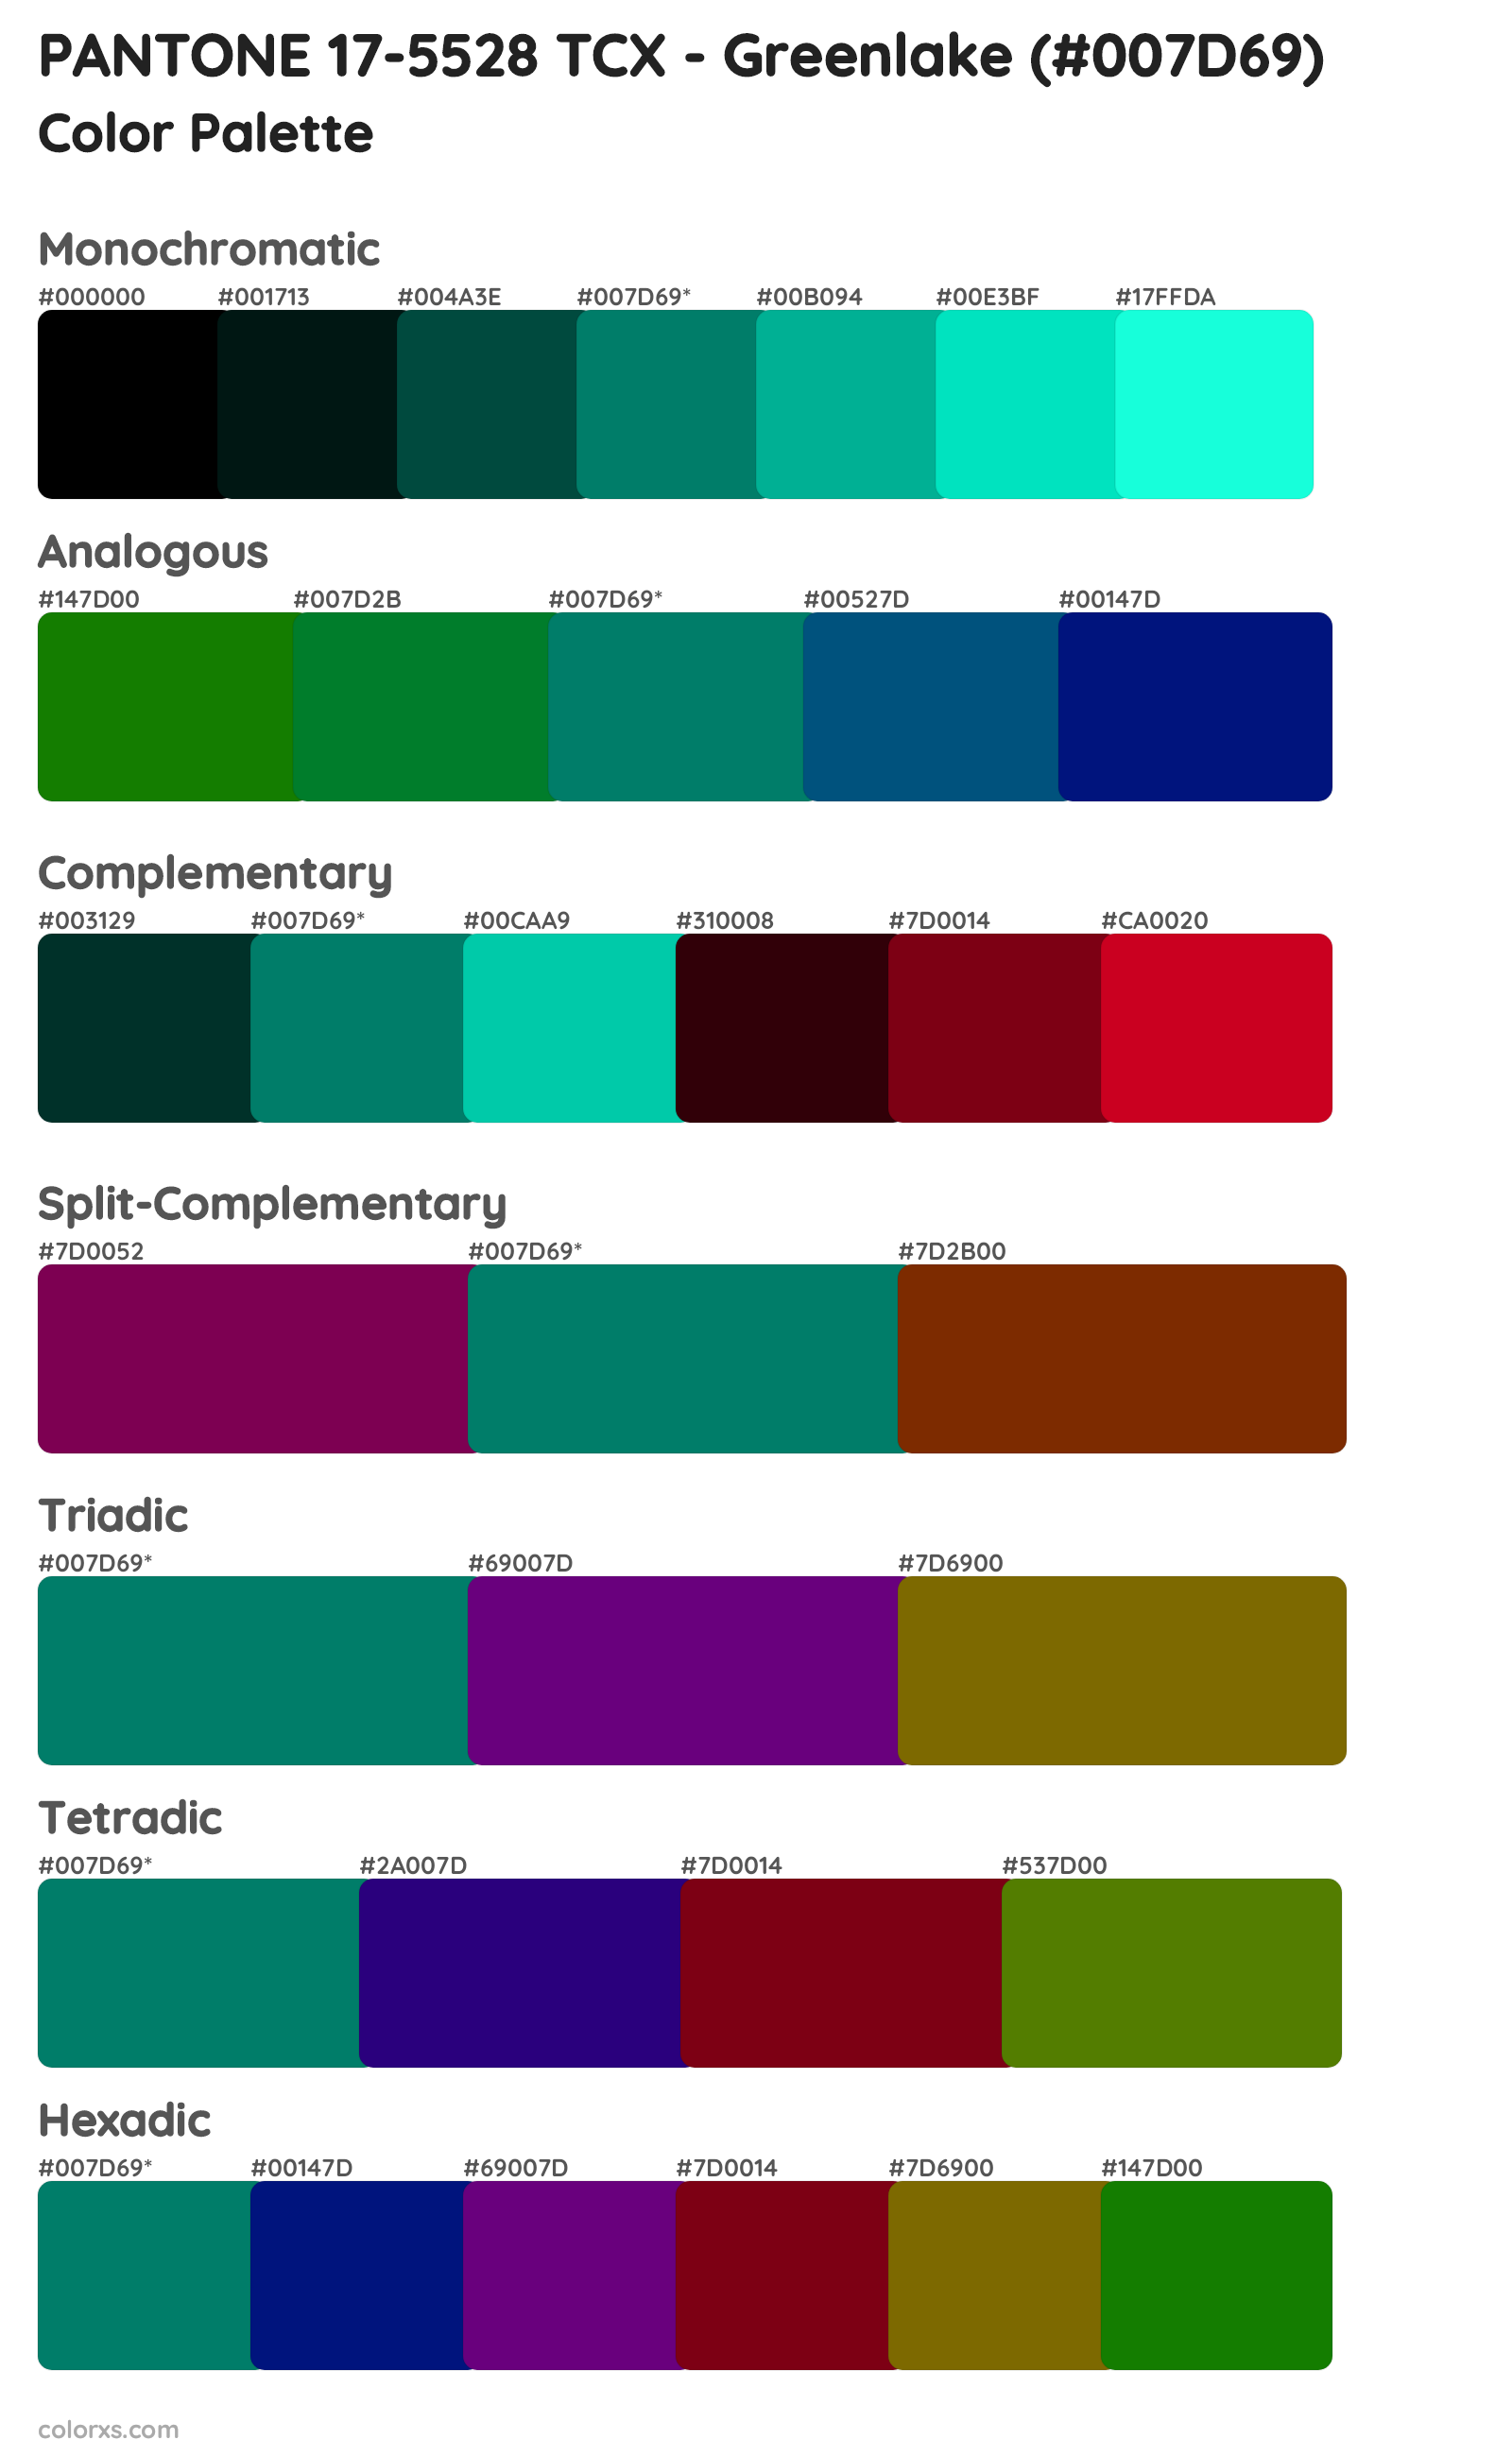 PANTONE 17-5528 TCX - Greenlake Color Scheme Palettes